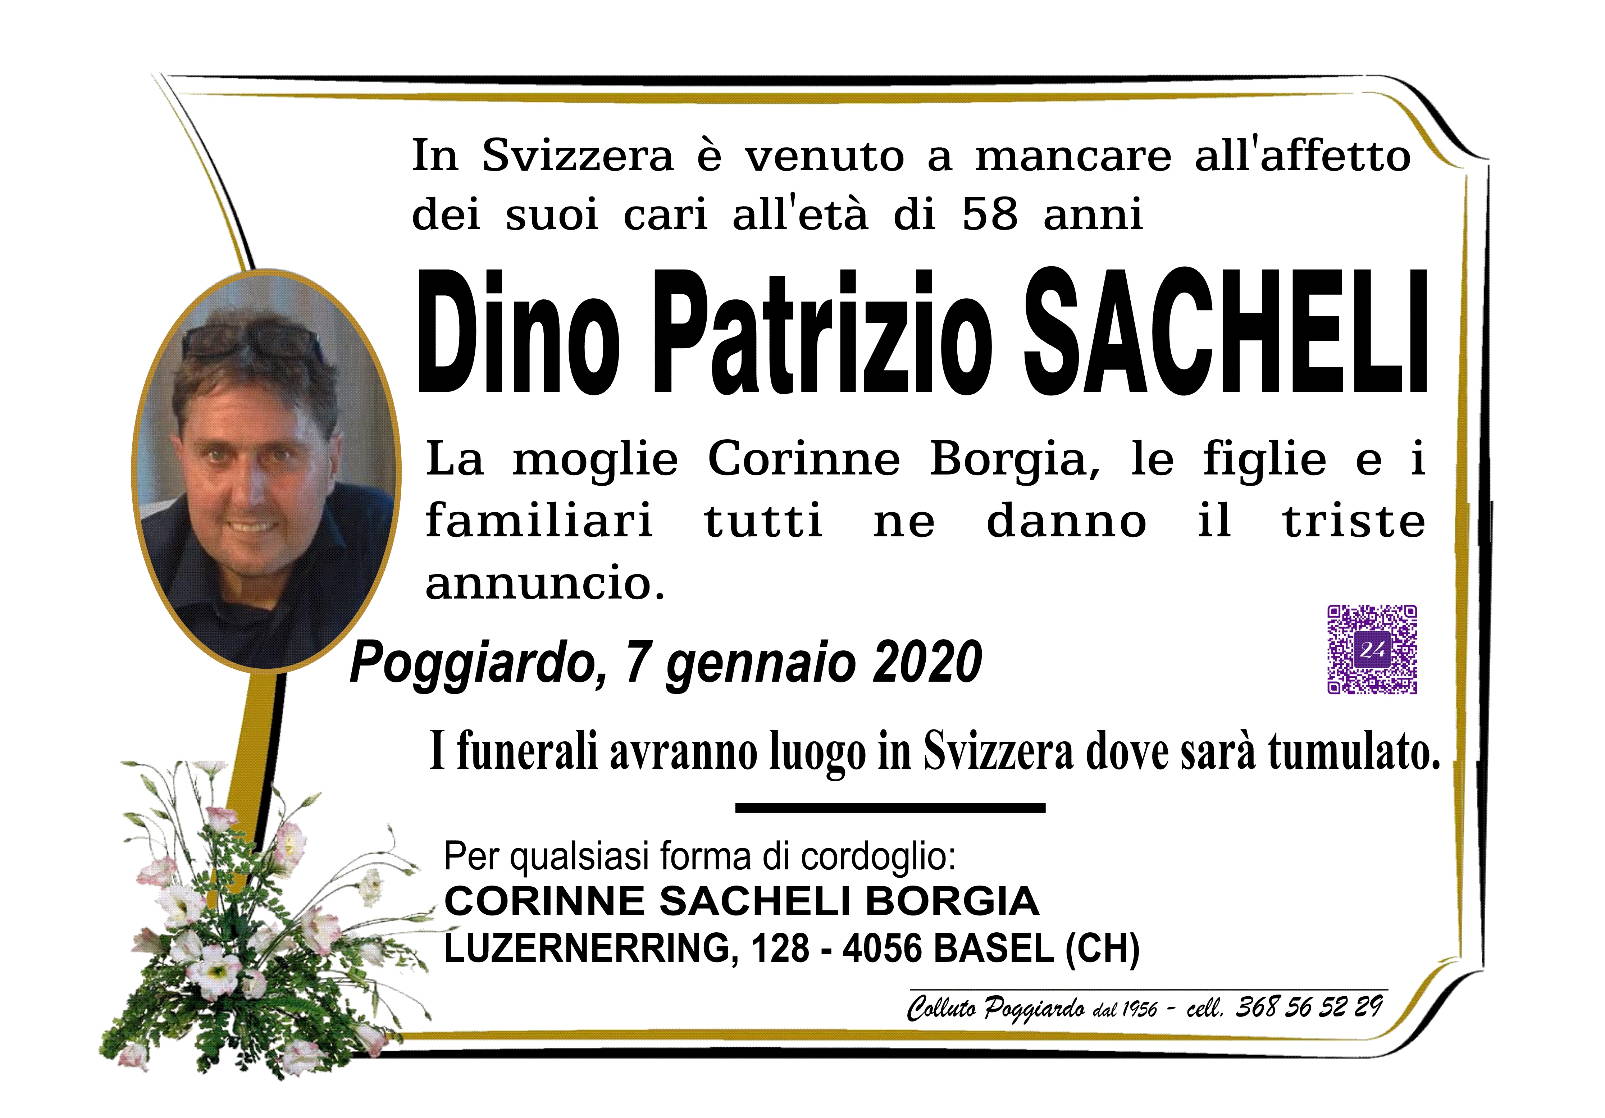 Dino Patrizio Sacheli